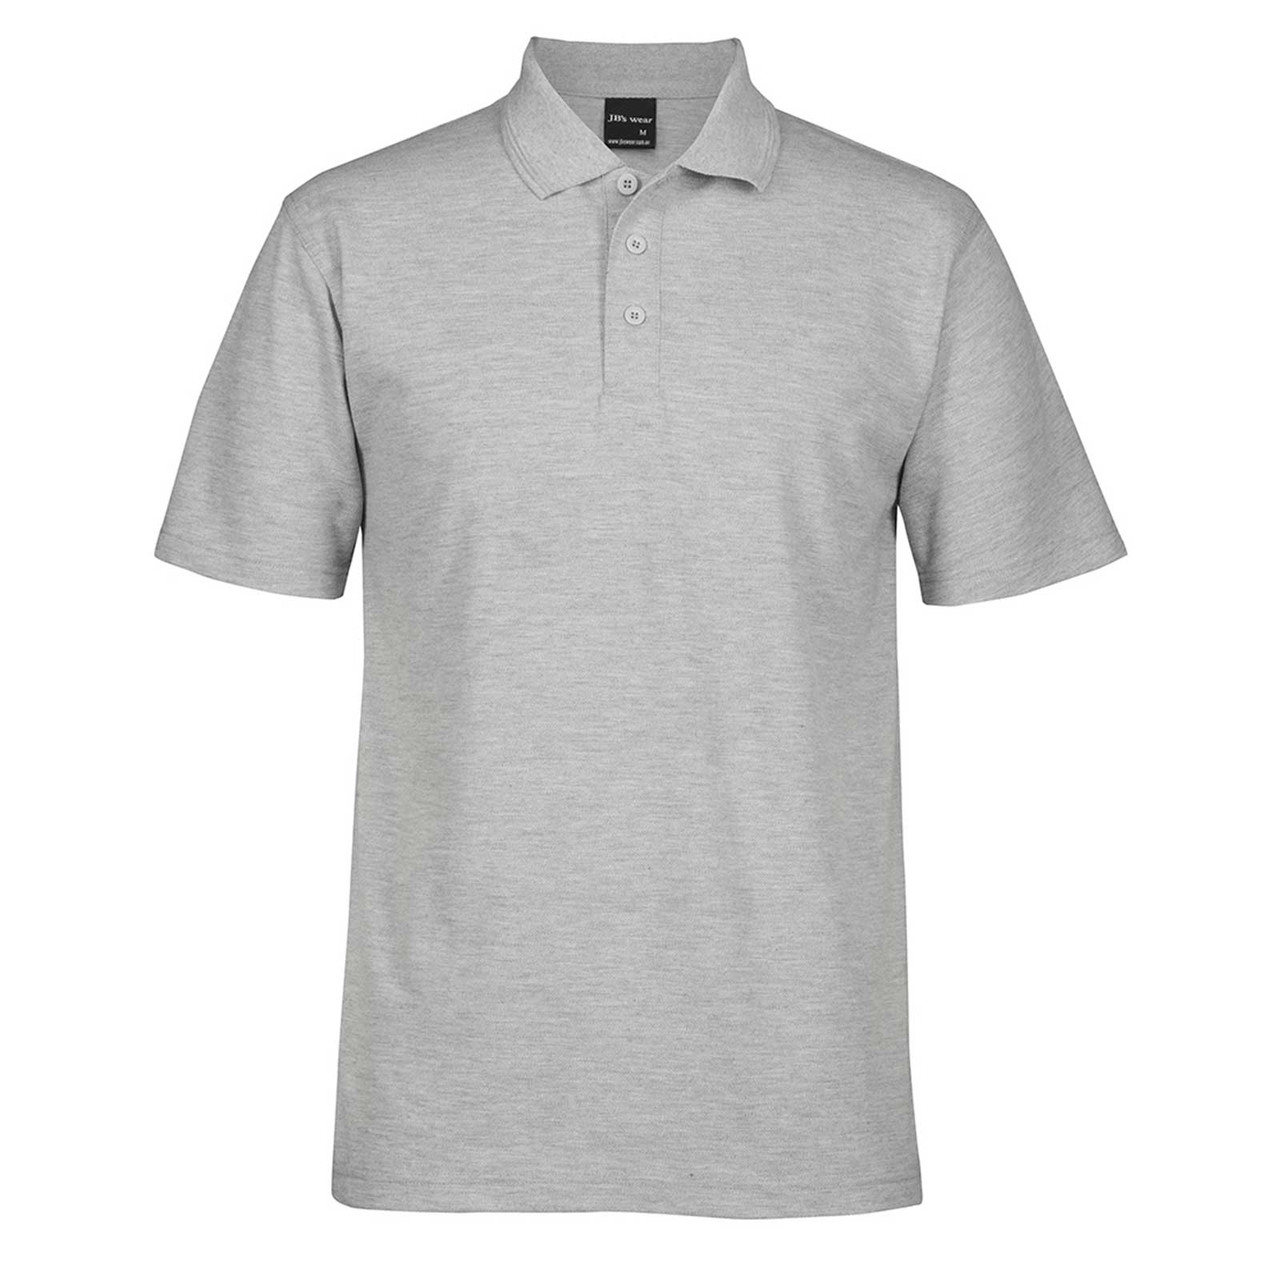 Classic Plain Poly/Cotton Knit Polo Shirt - Plus Size - Small to 9XL